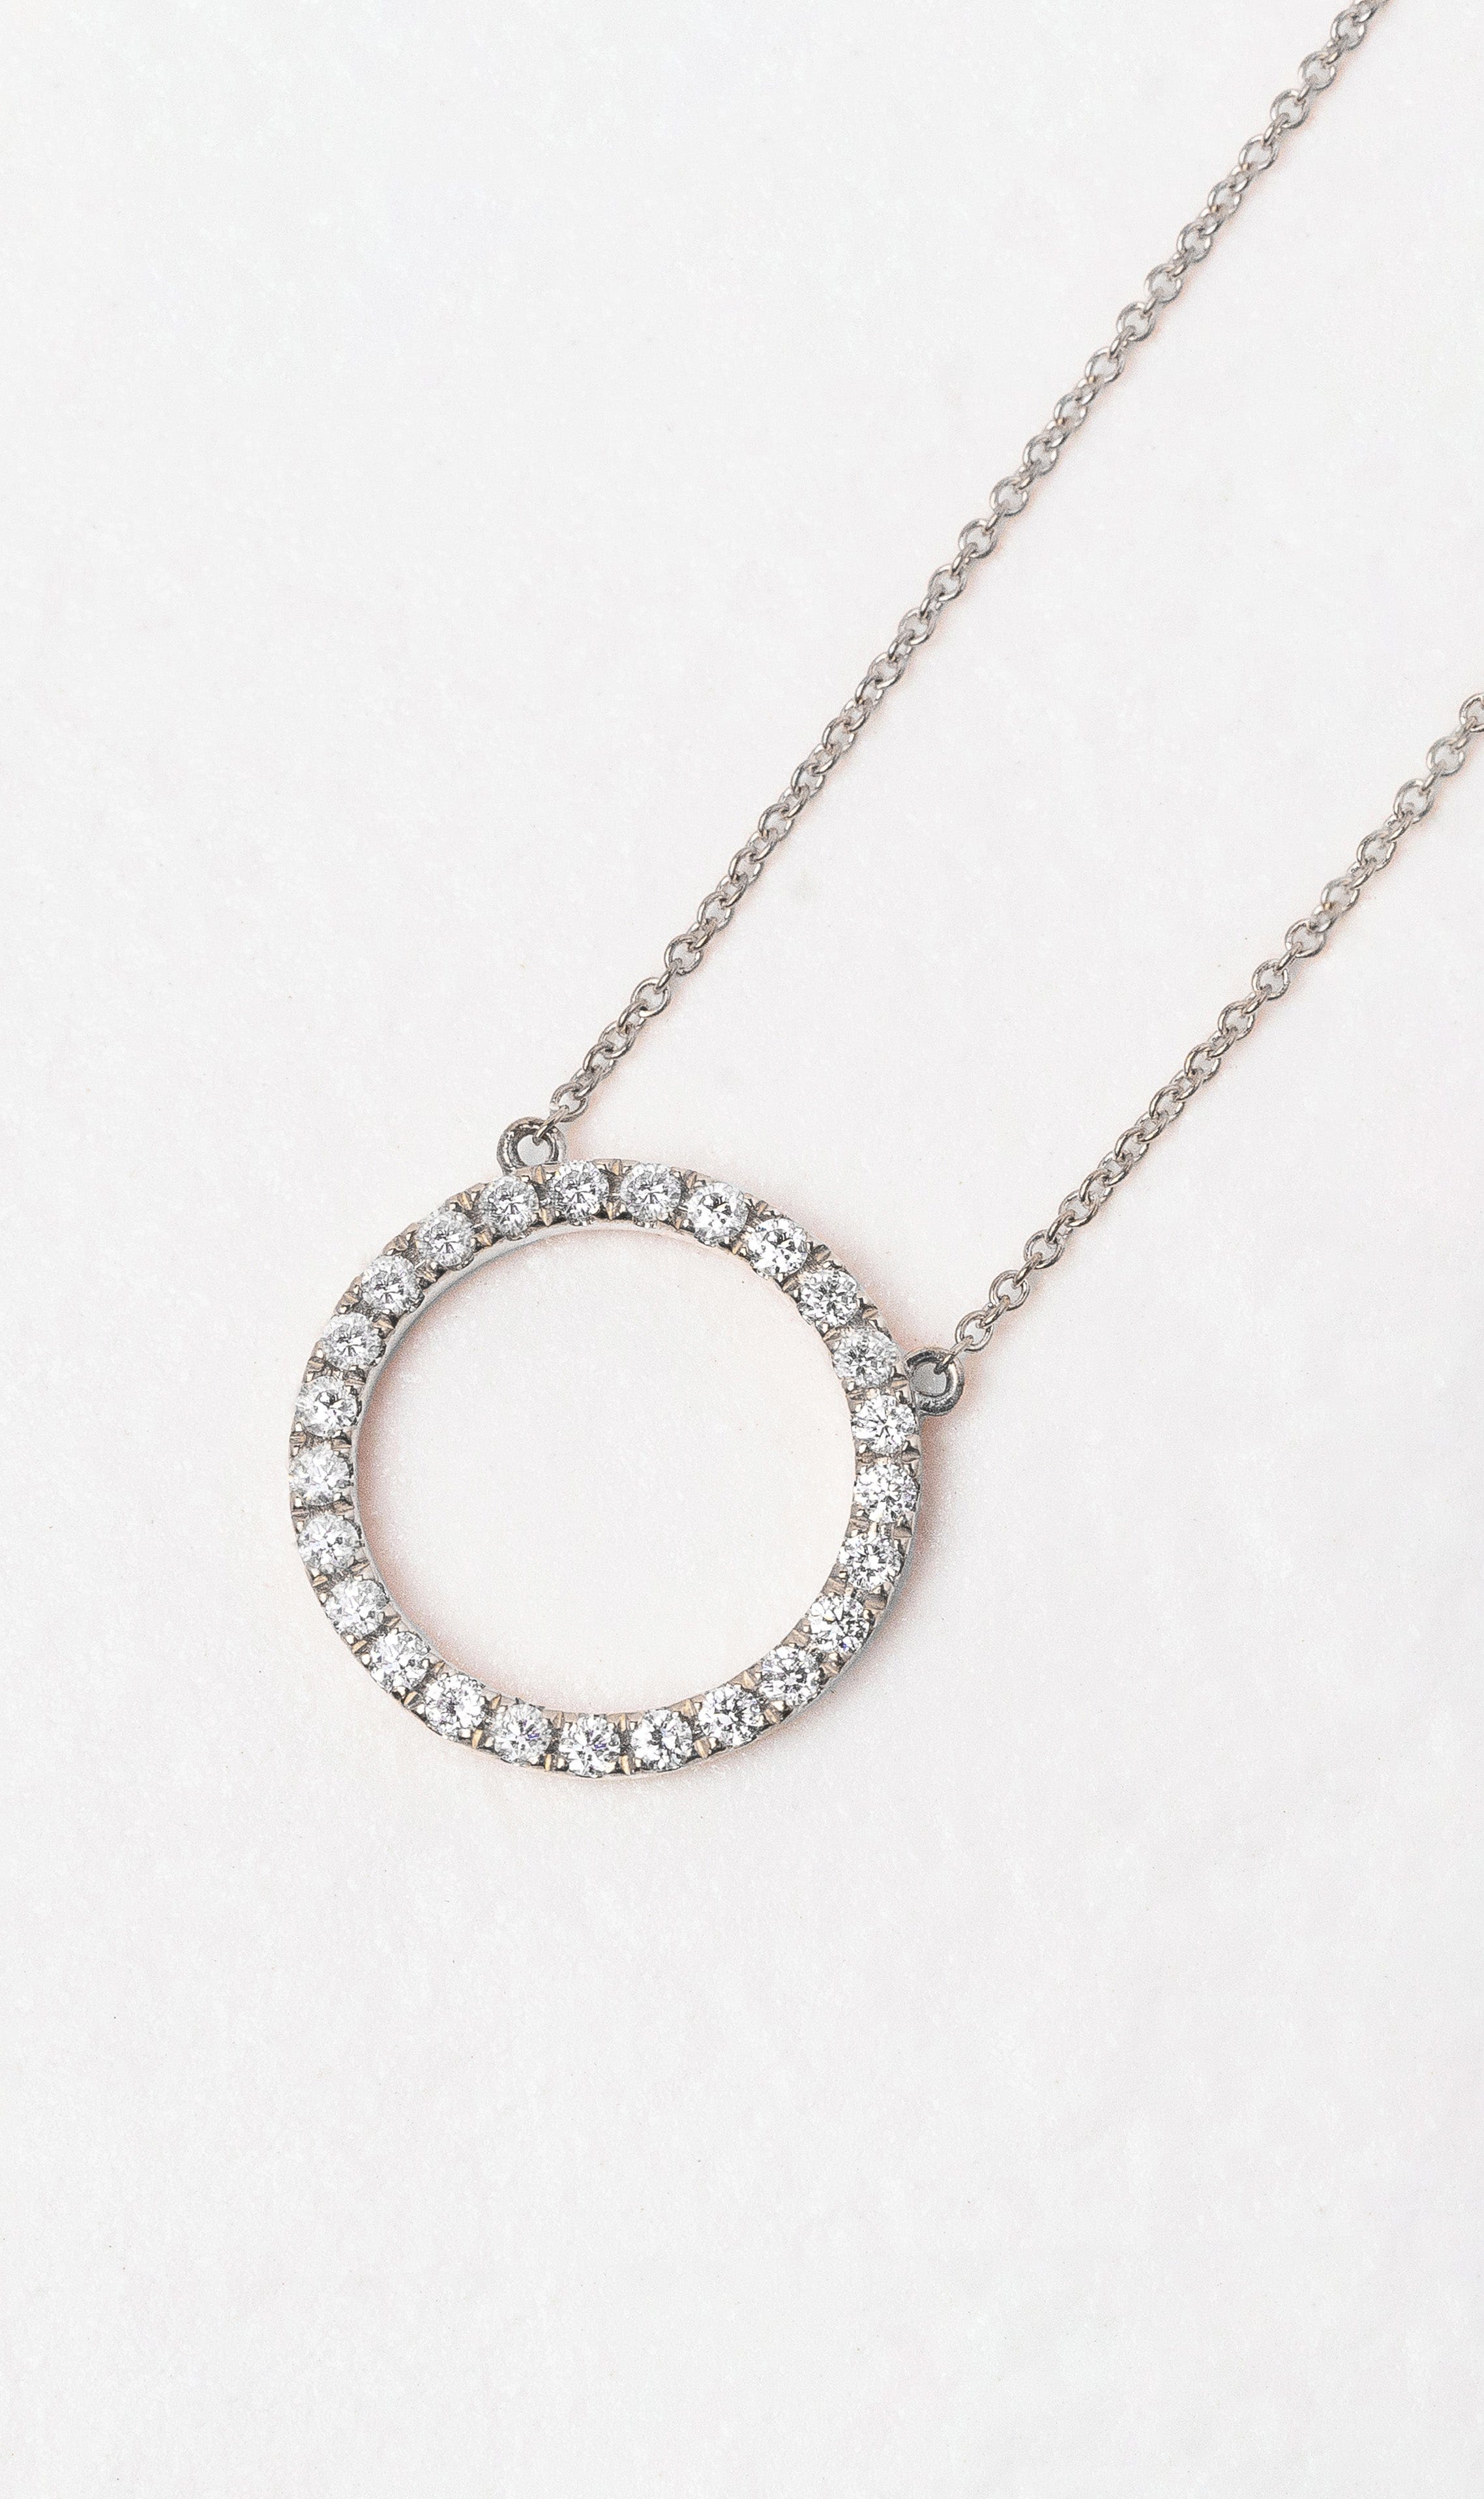 Hogans Family Jewellers 9K WG Circular Diamond Necklace